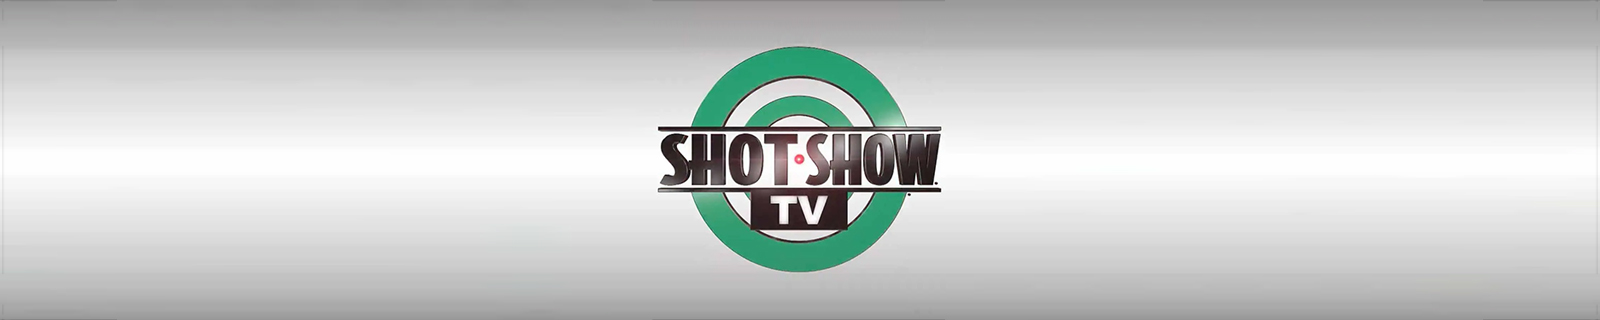 SHOT Show TV logo